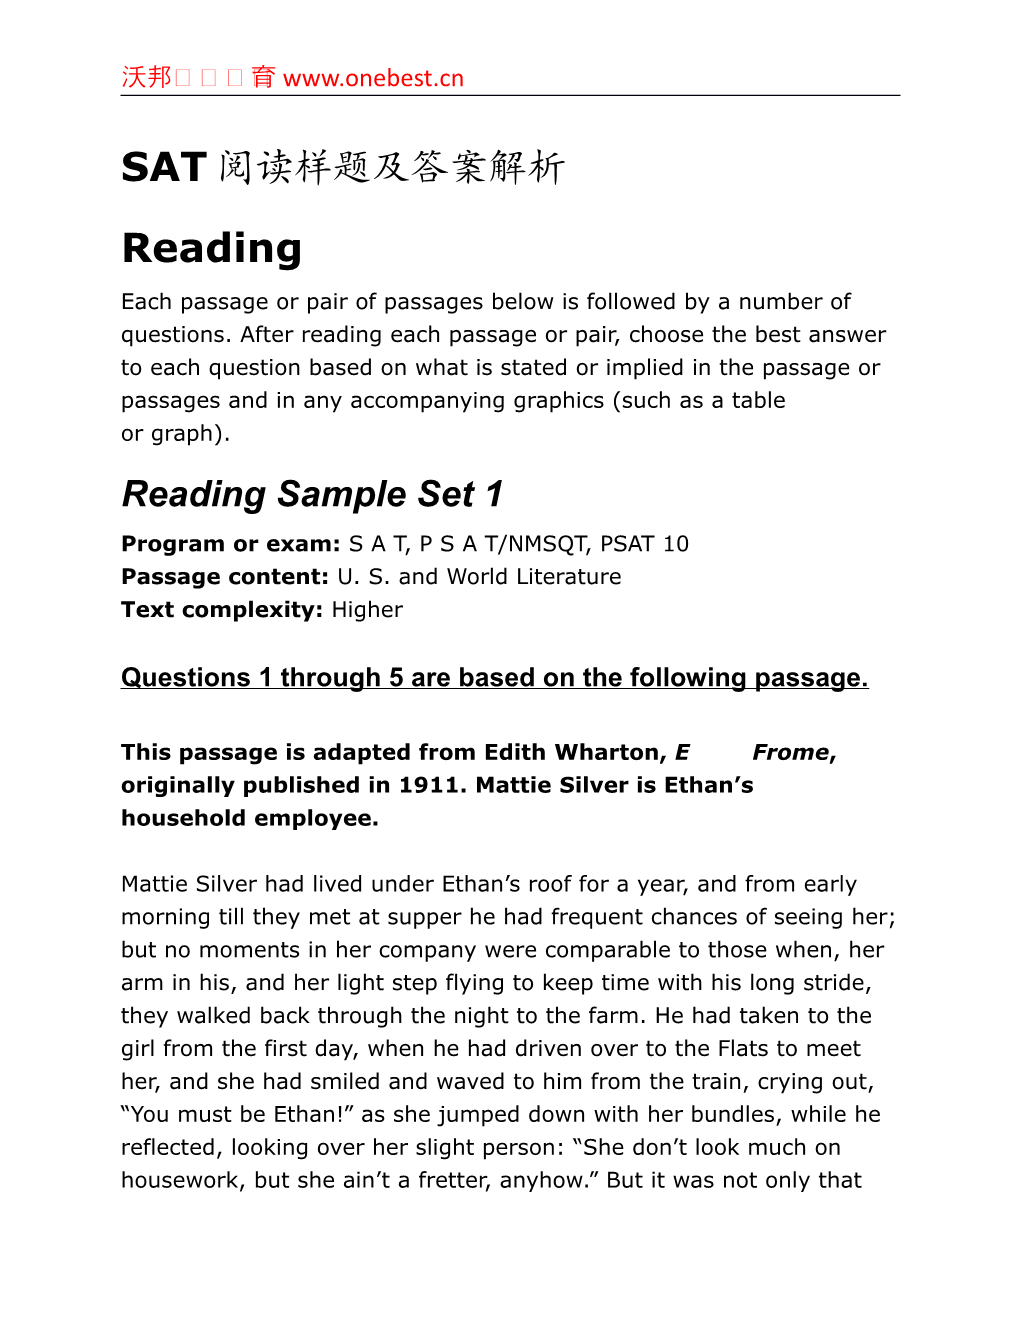 Reading Sample Set 1